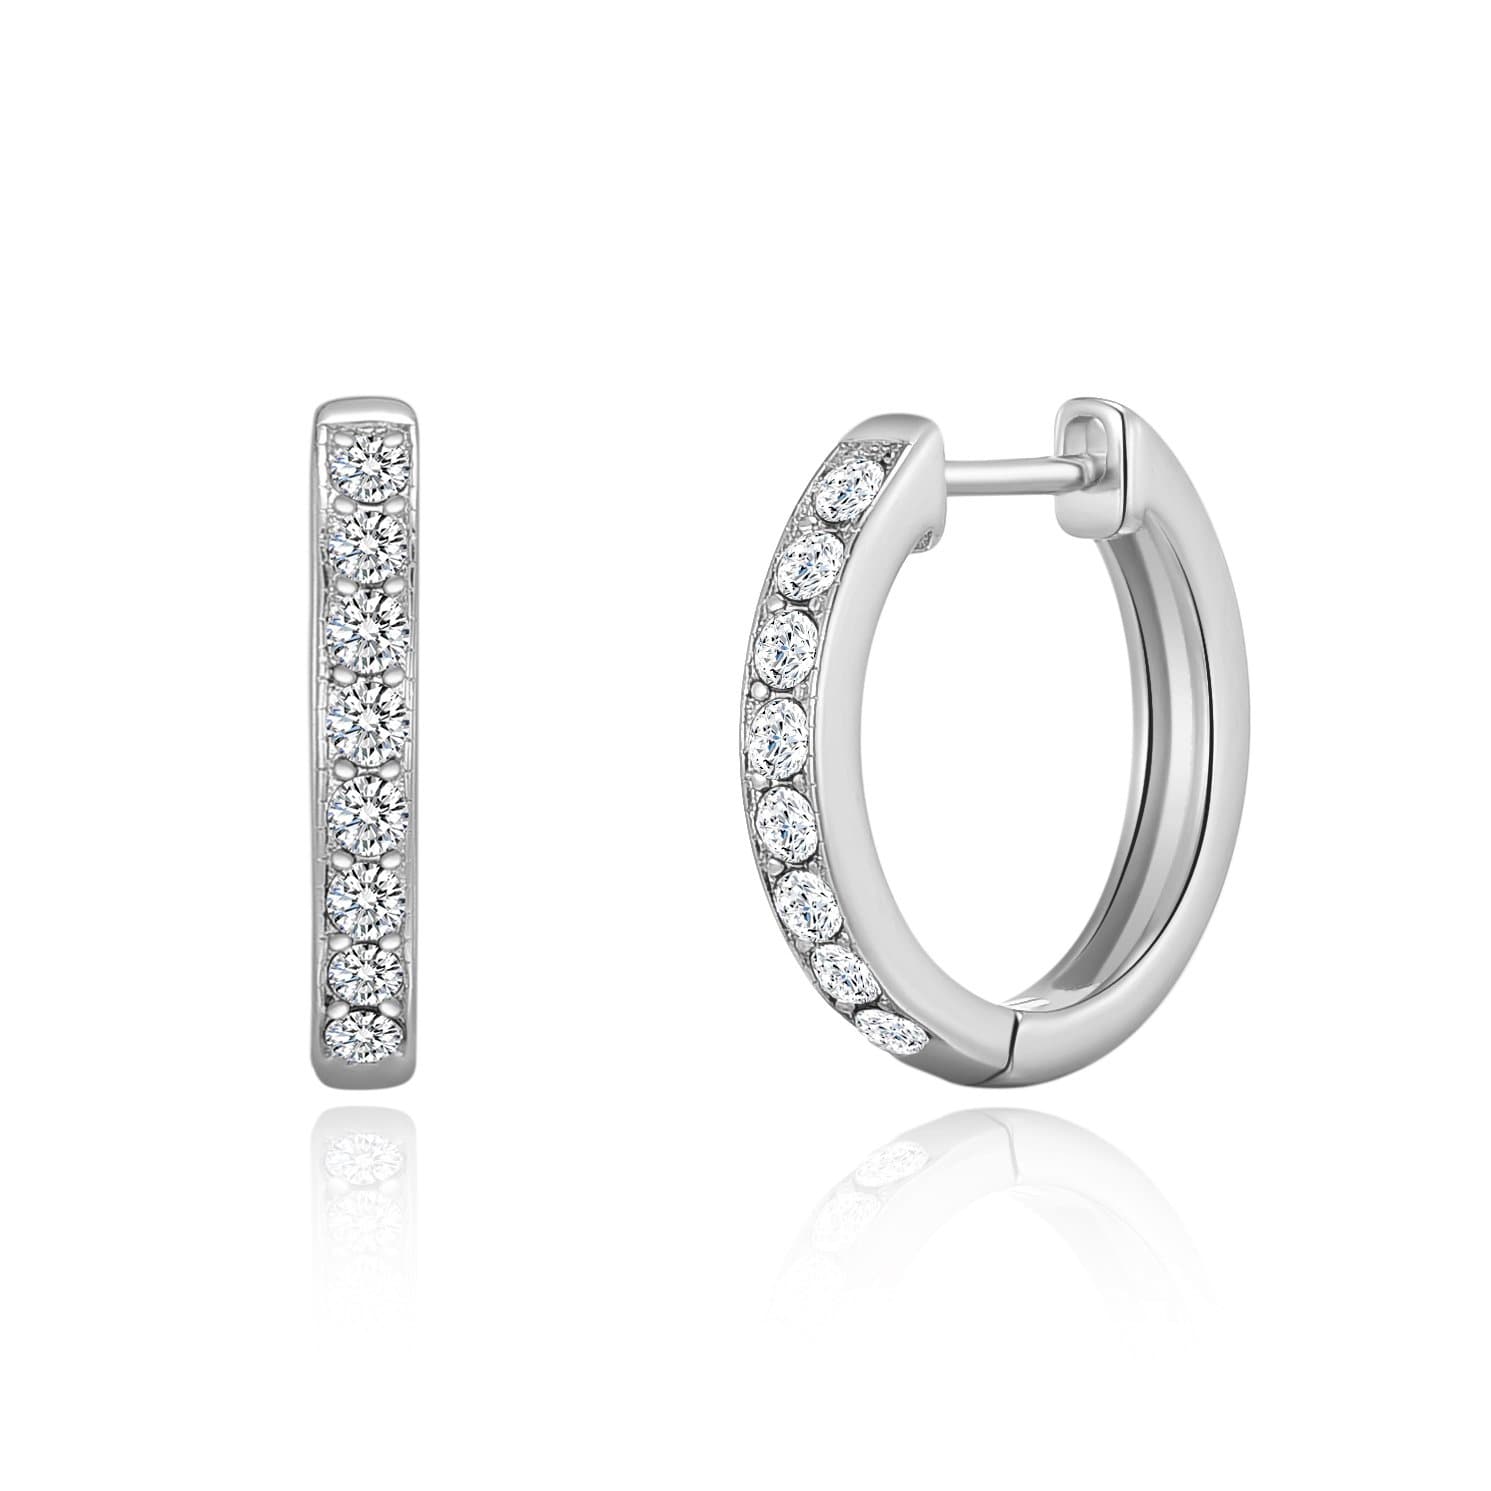 Silver Plated Hoop Earrings Created with Zircondia® Crystals by Philip Jones Jewellery